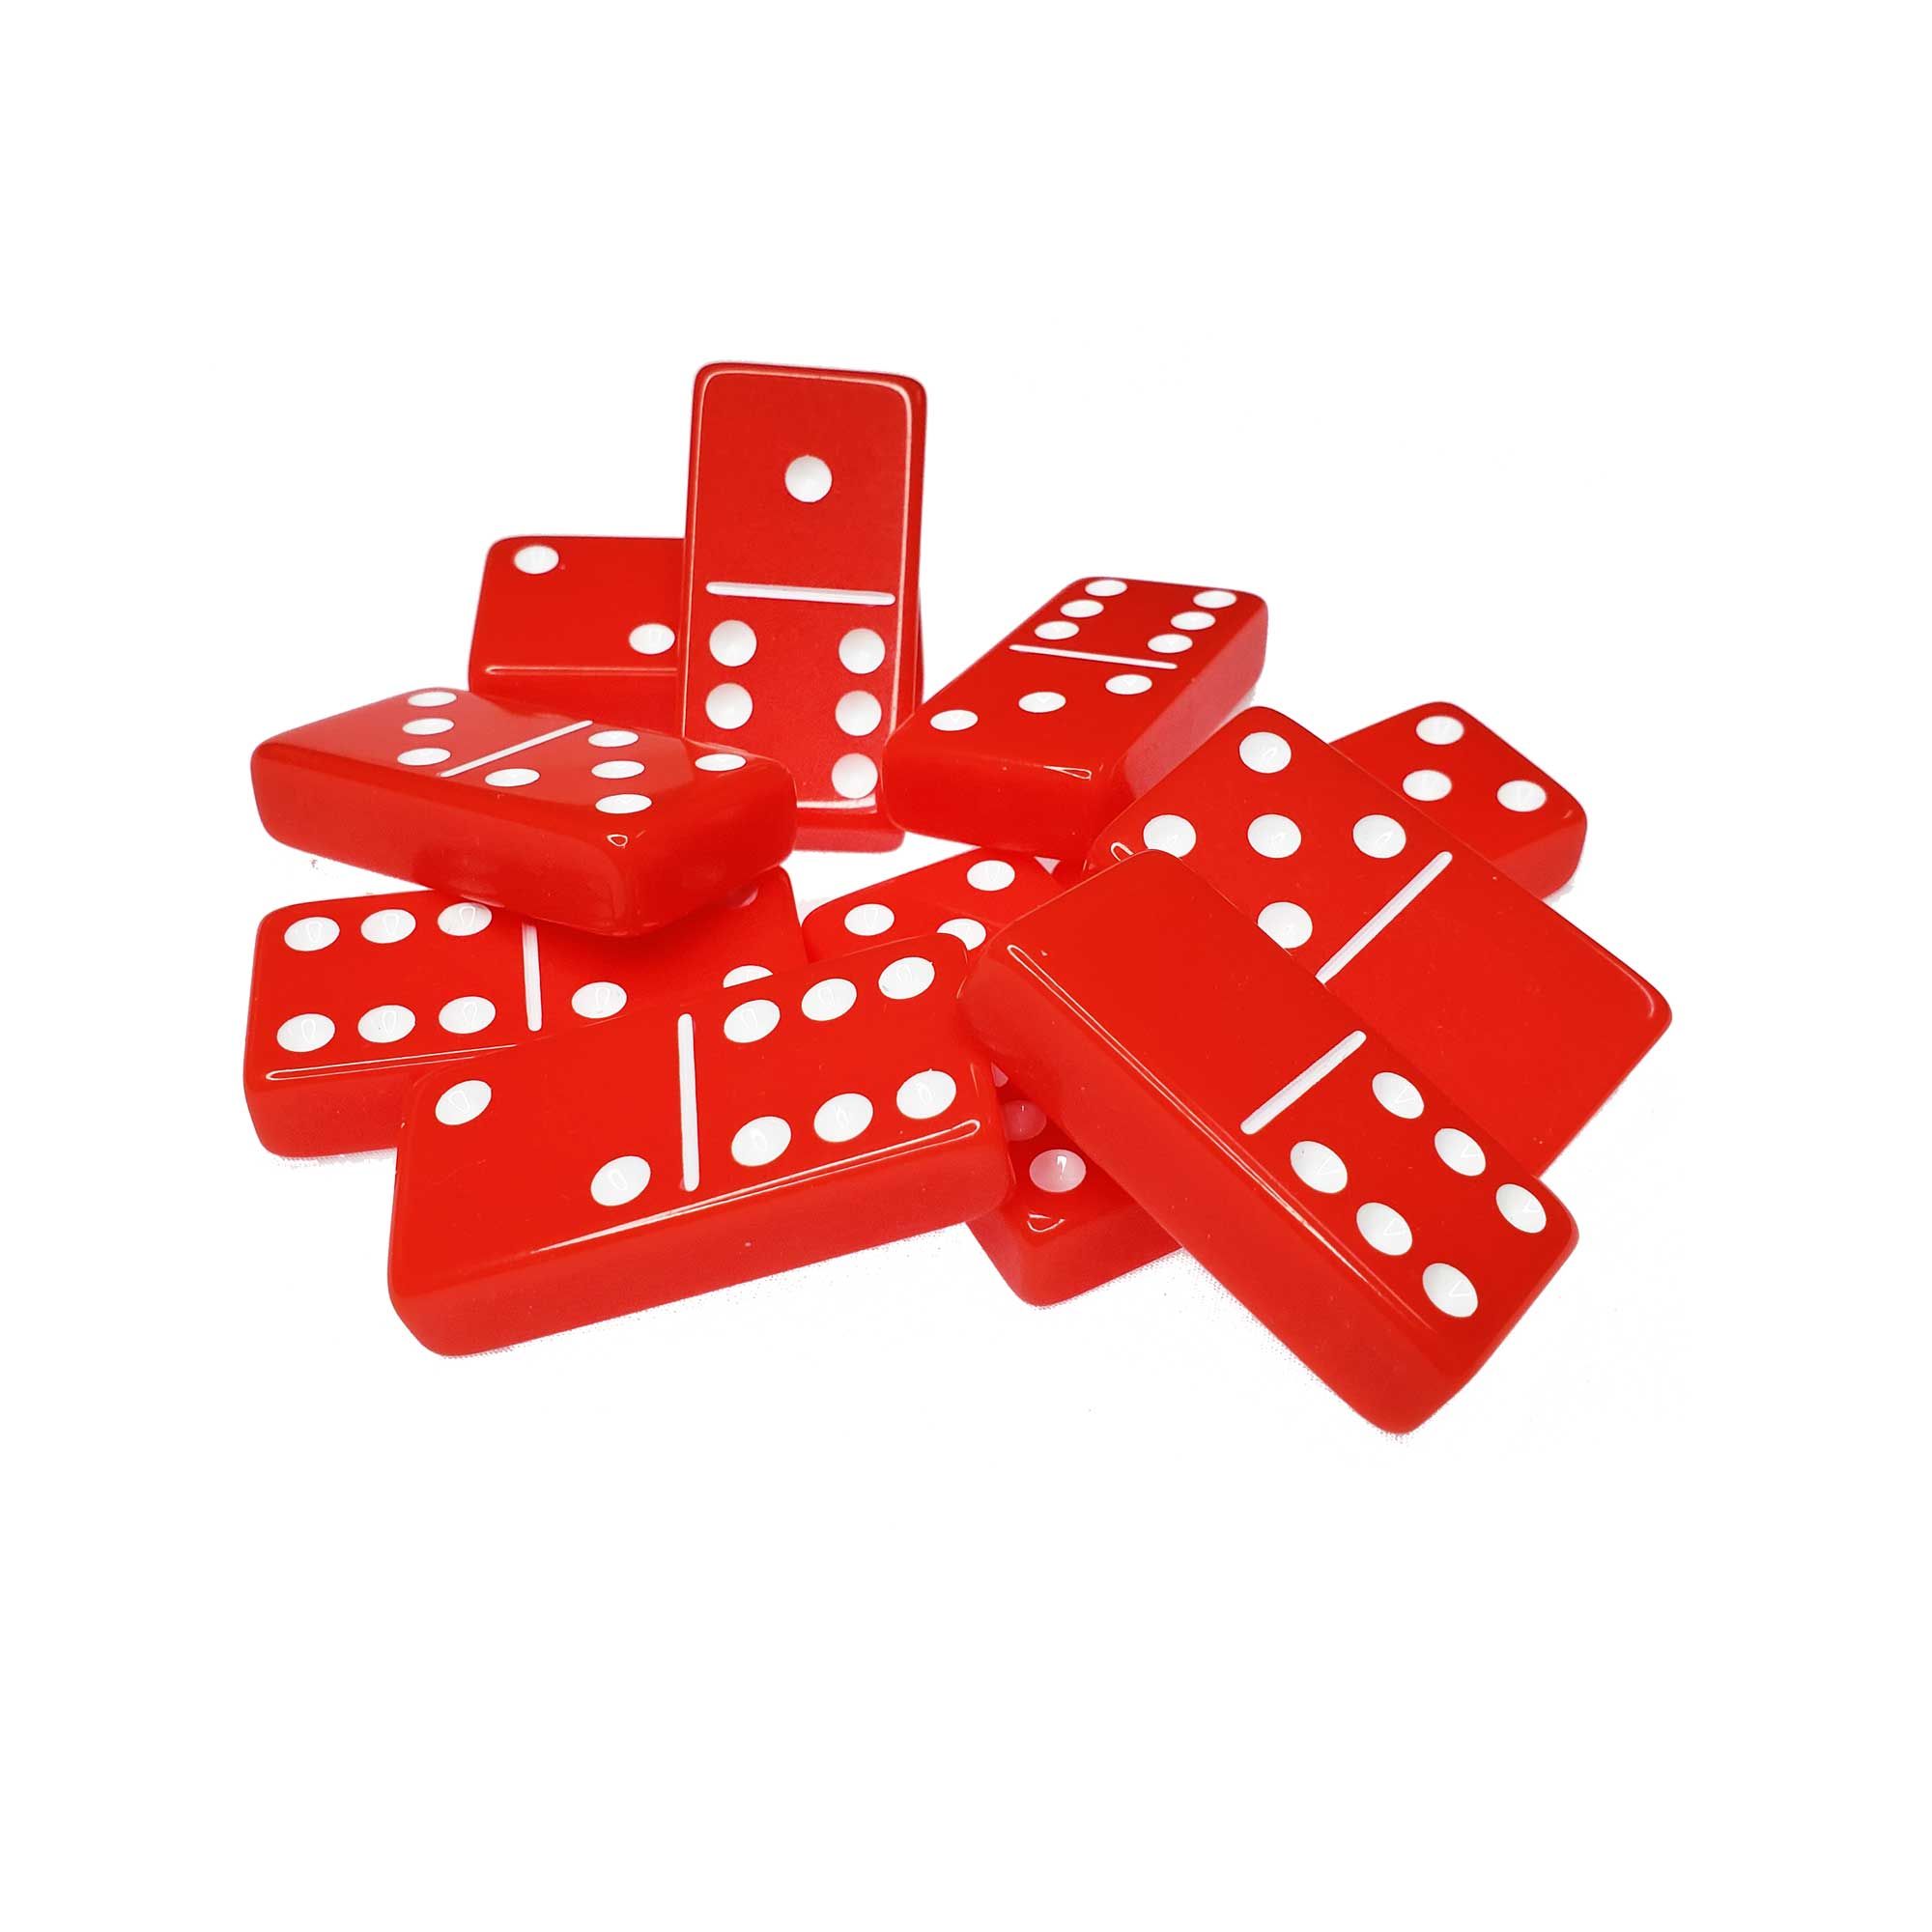 Premium ACRYLIC Double 6 JUMBO Dominoes Set | RED